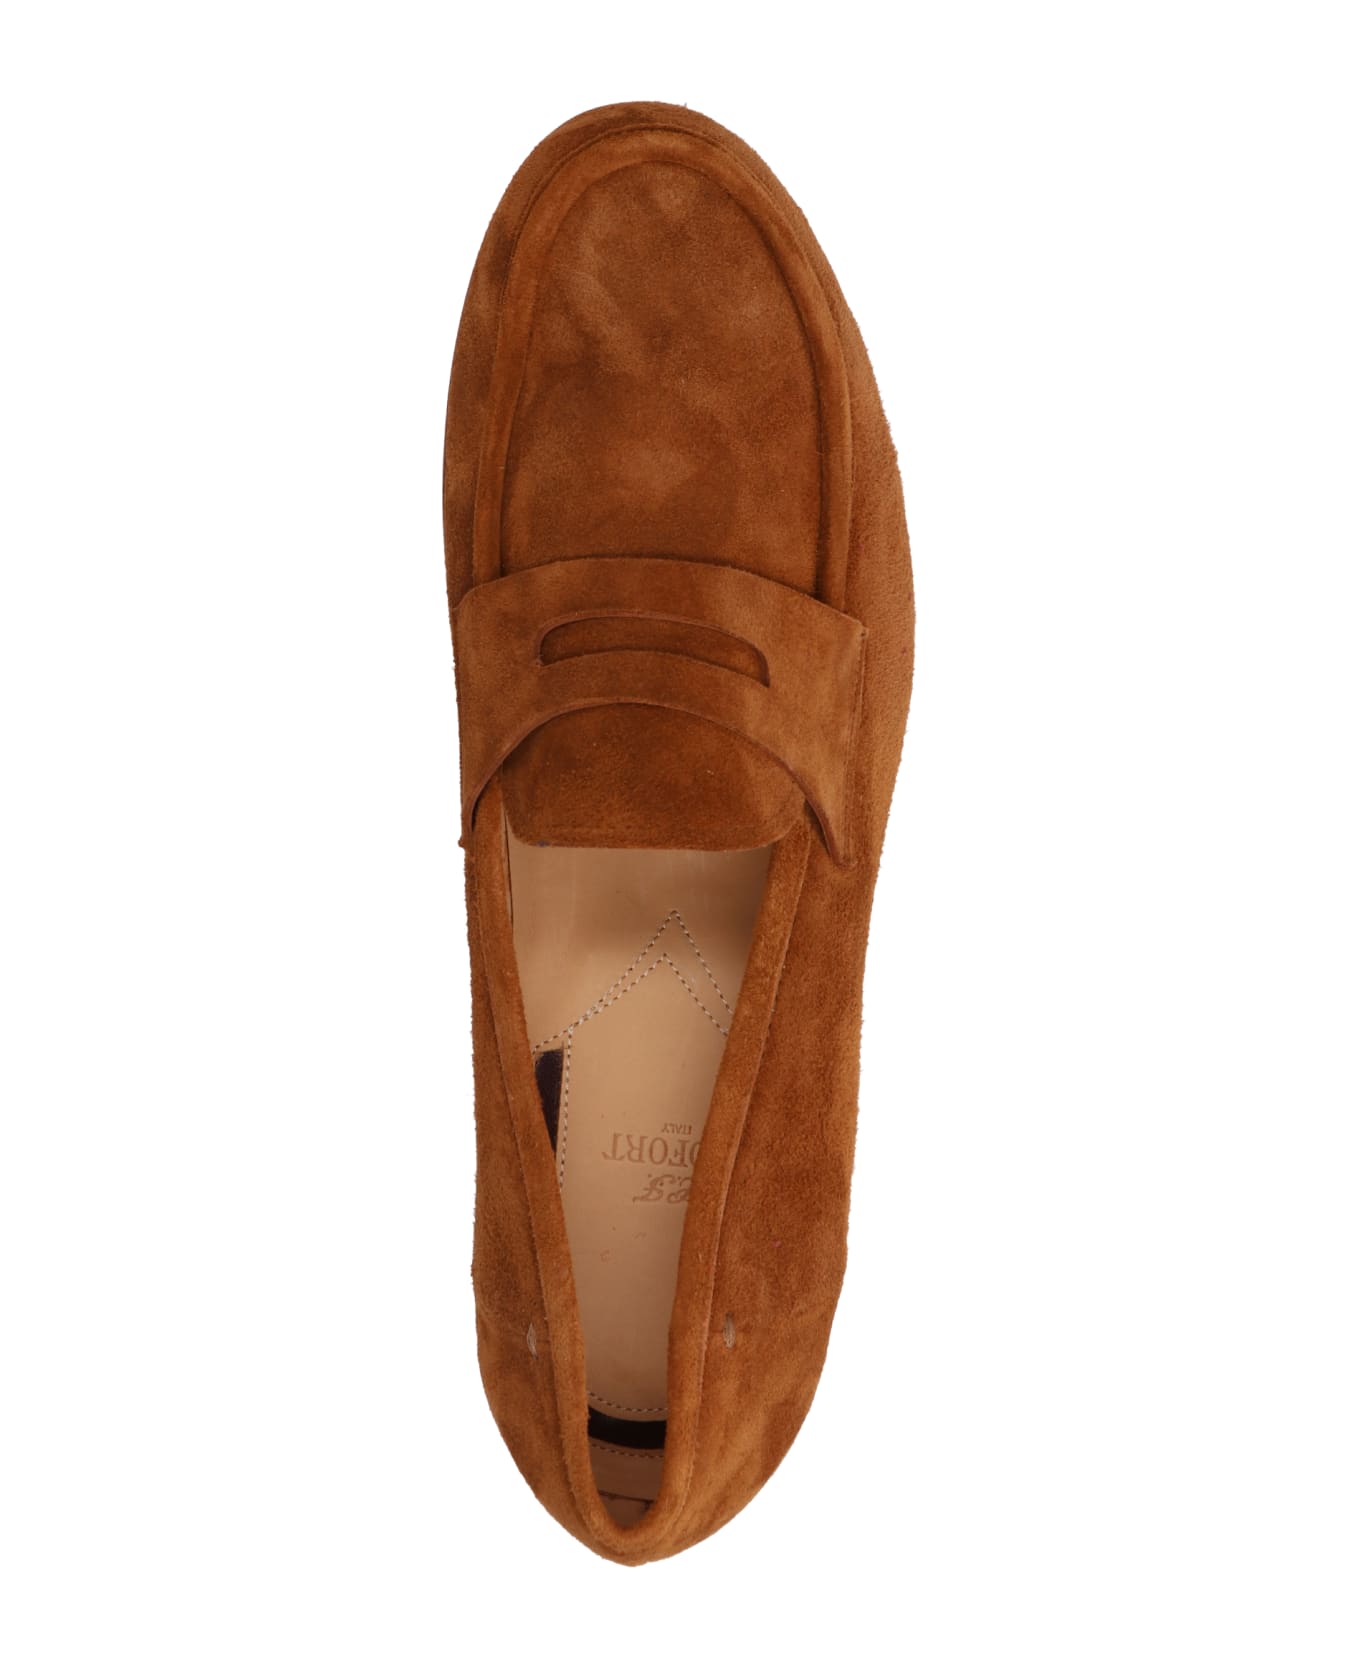 Lidfort 'velvet' Loafers - Brown